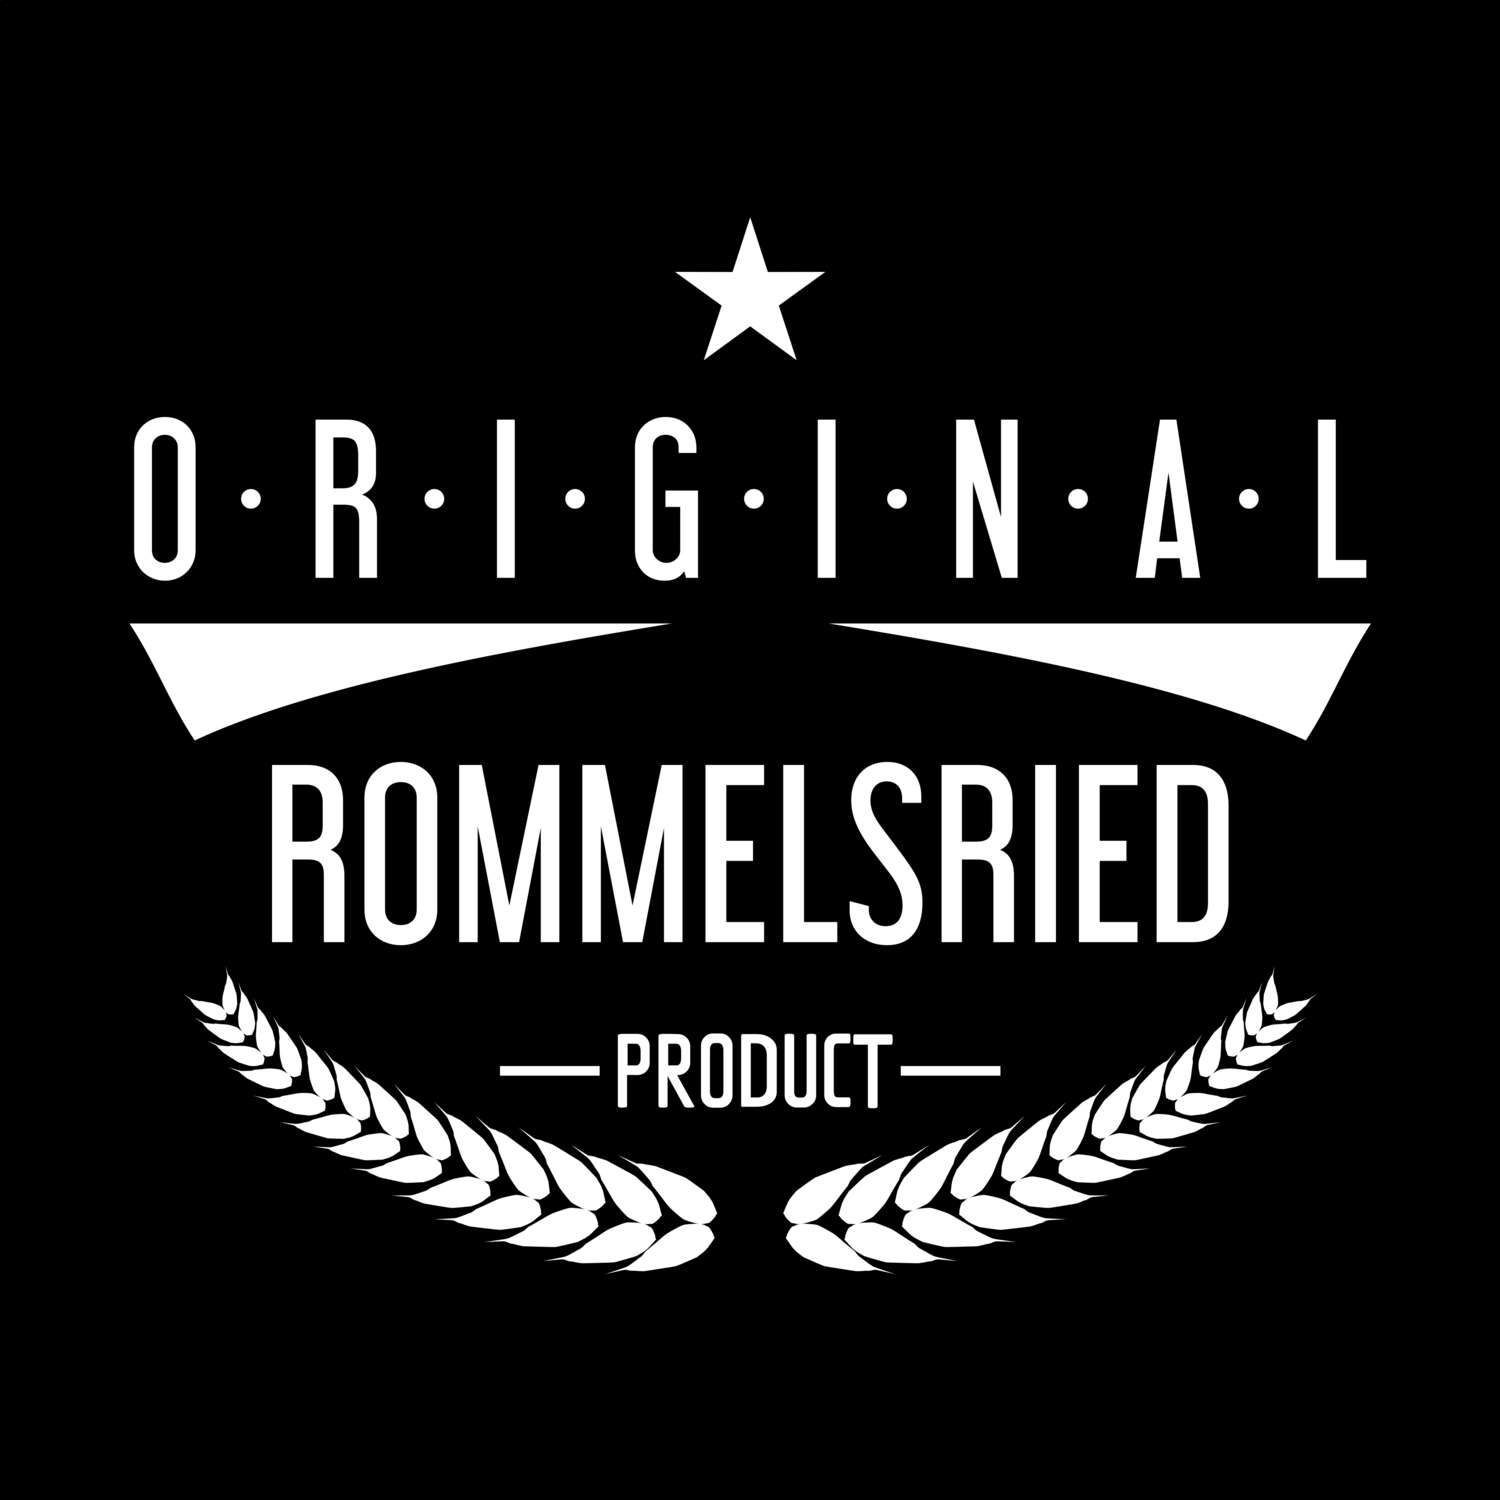 Rommelsried T-Shirt »Original Product«